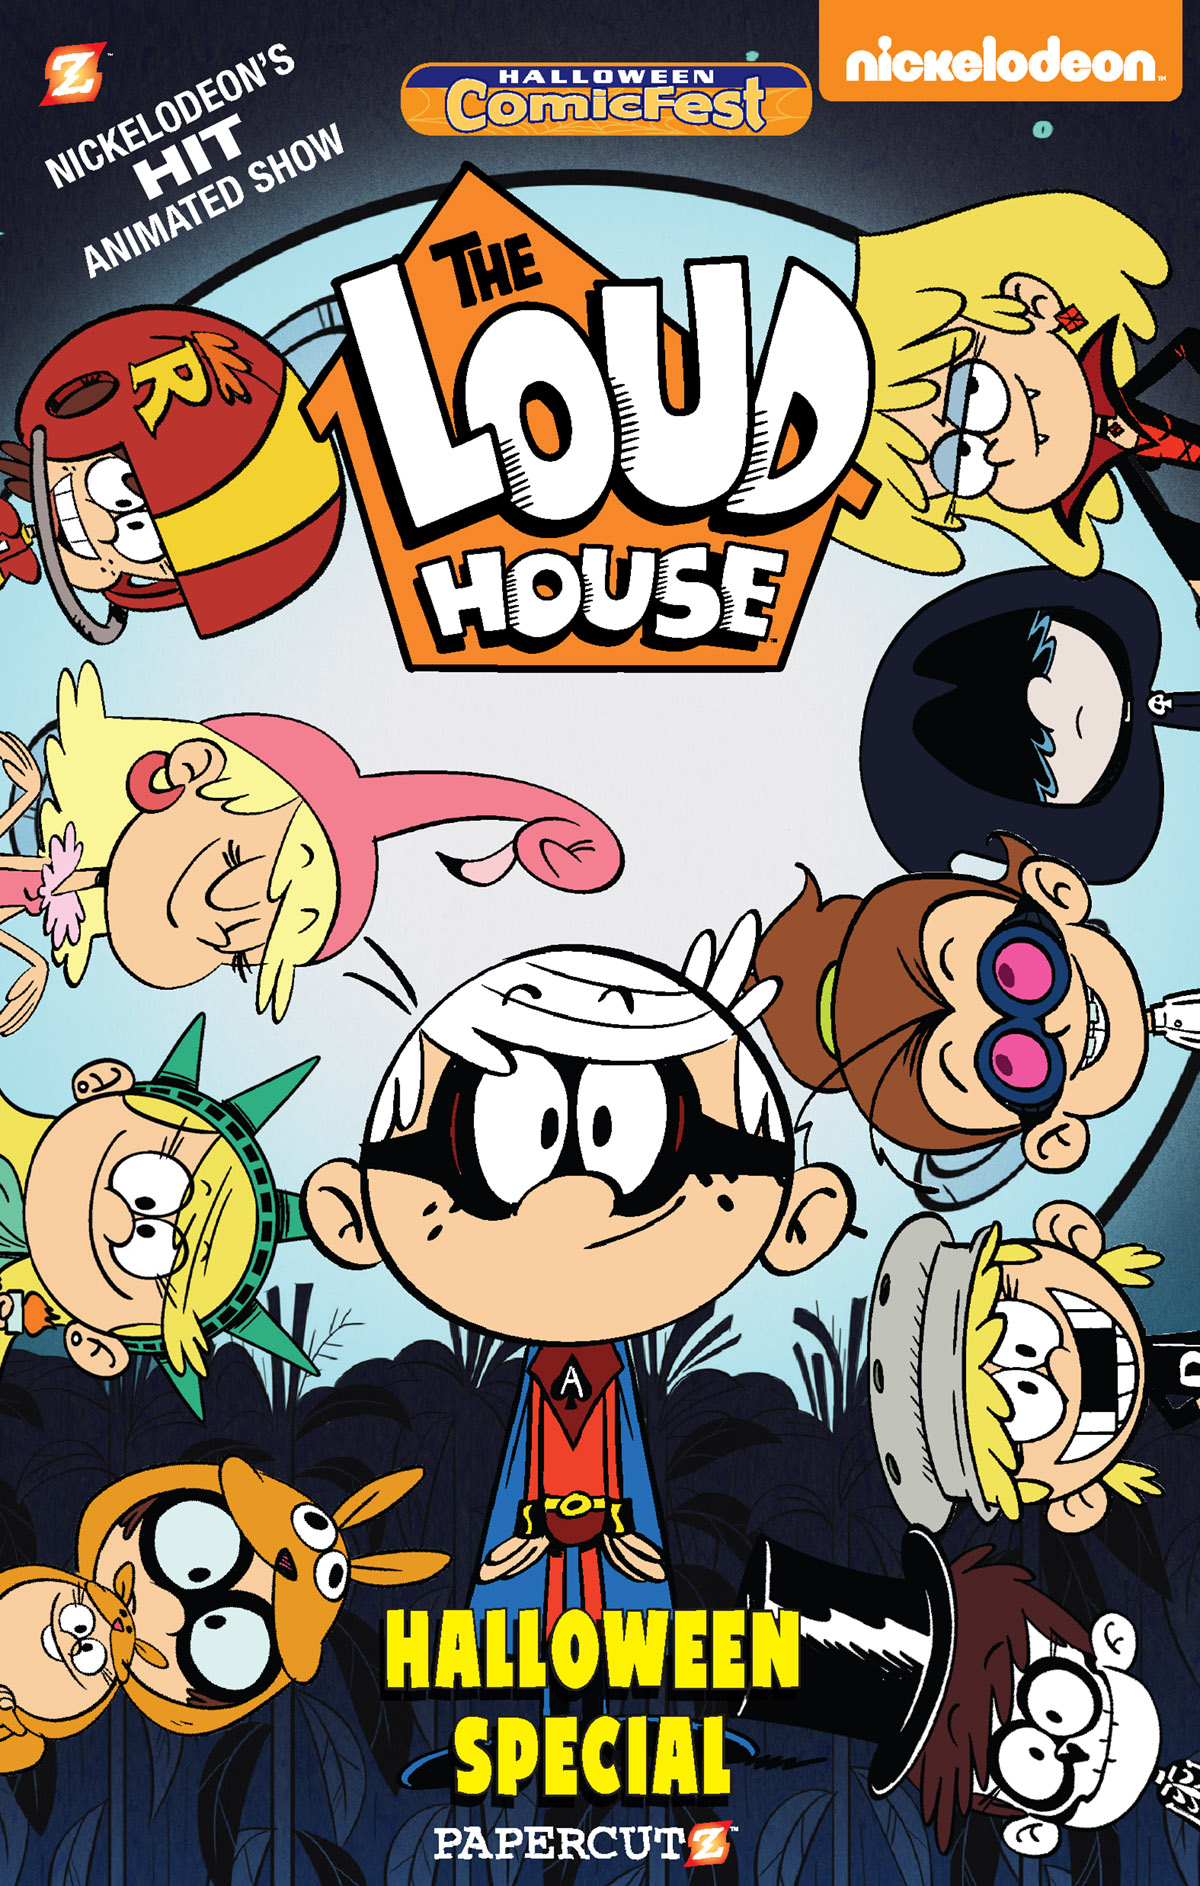 The Loud House: “A Very LOUD Halloween”